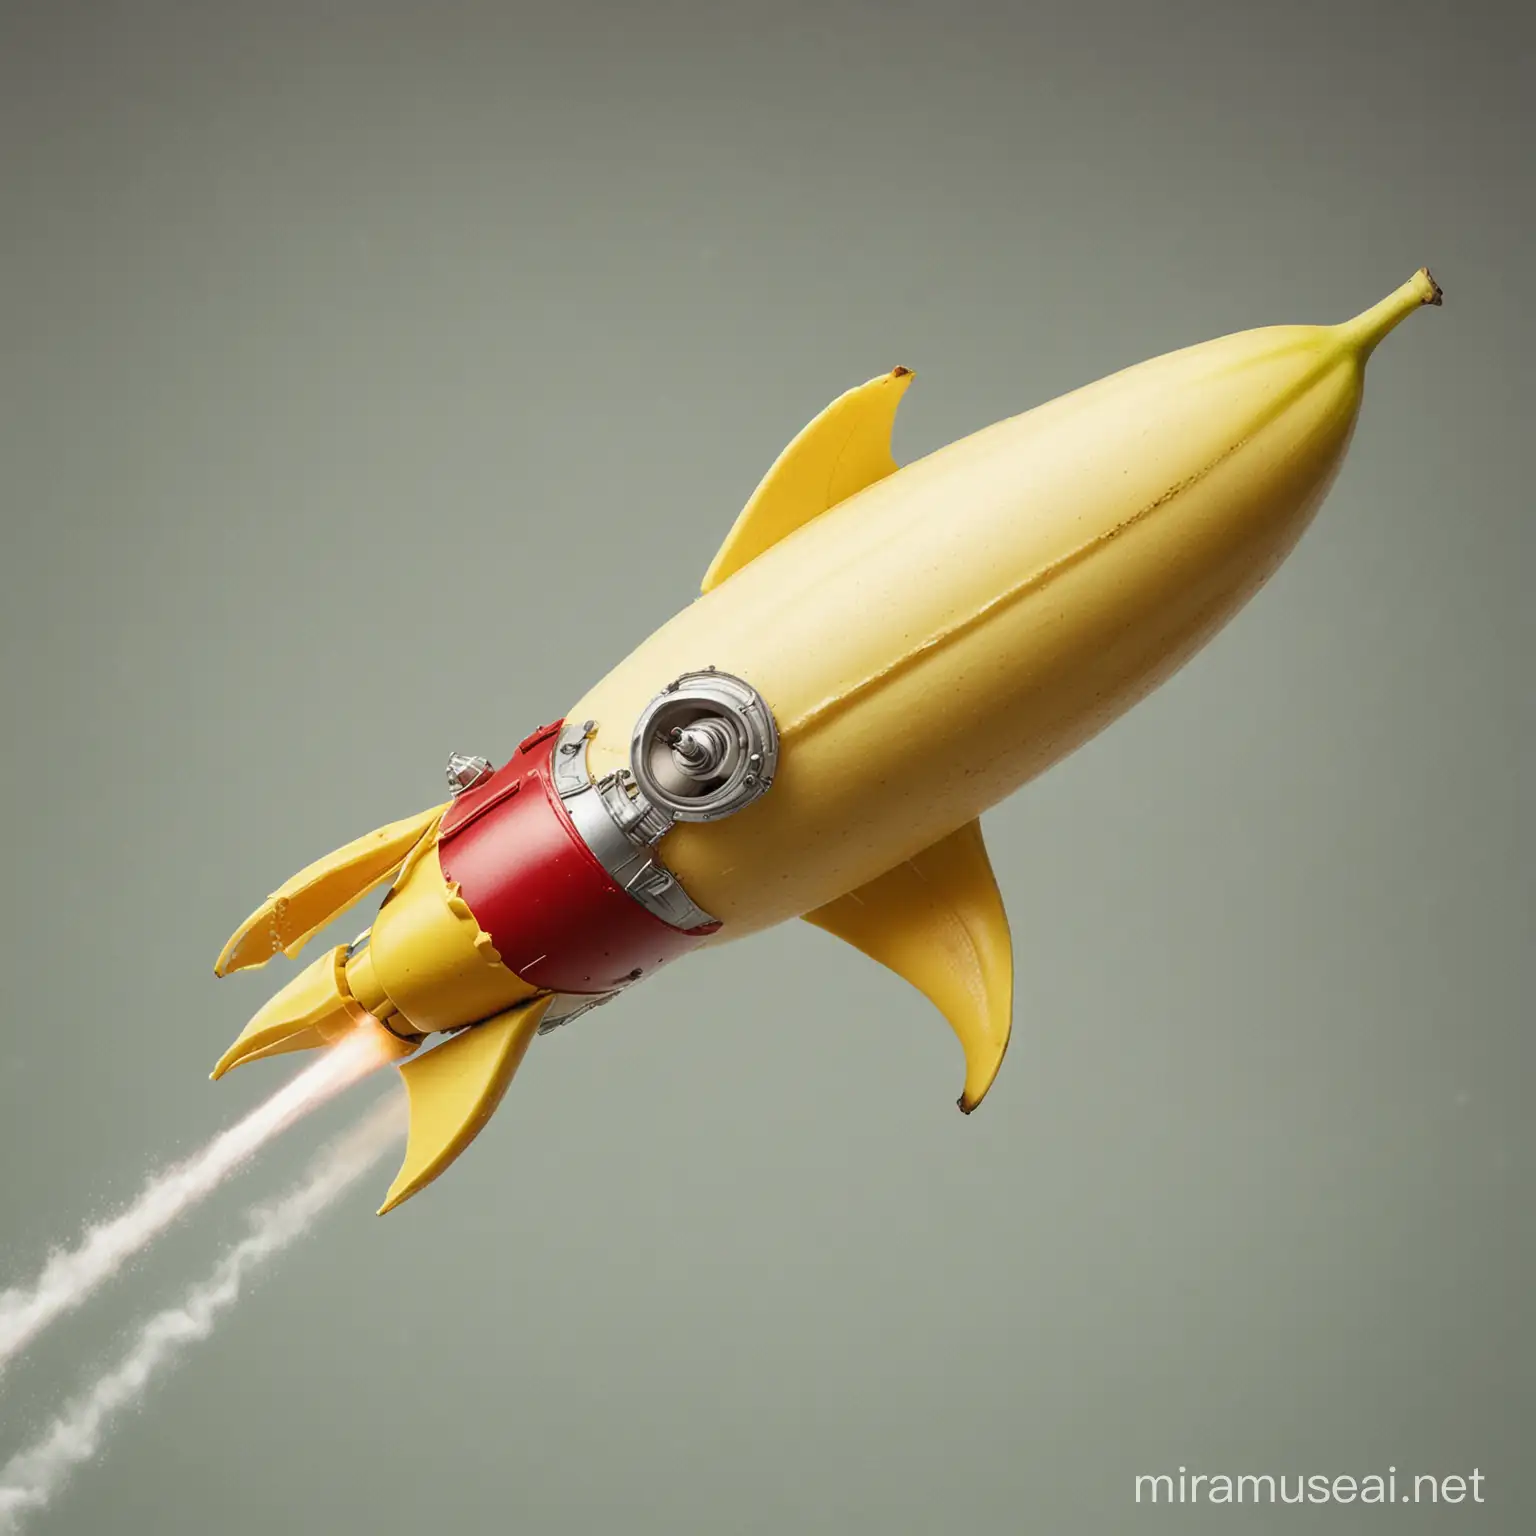 
banana rocket ship